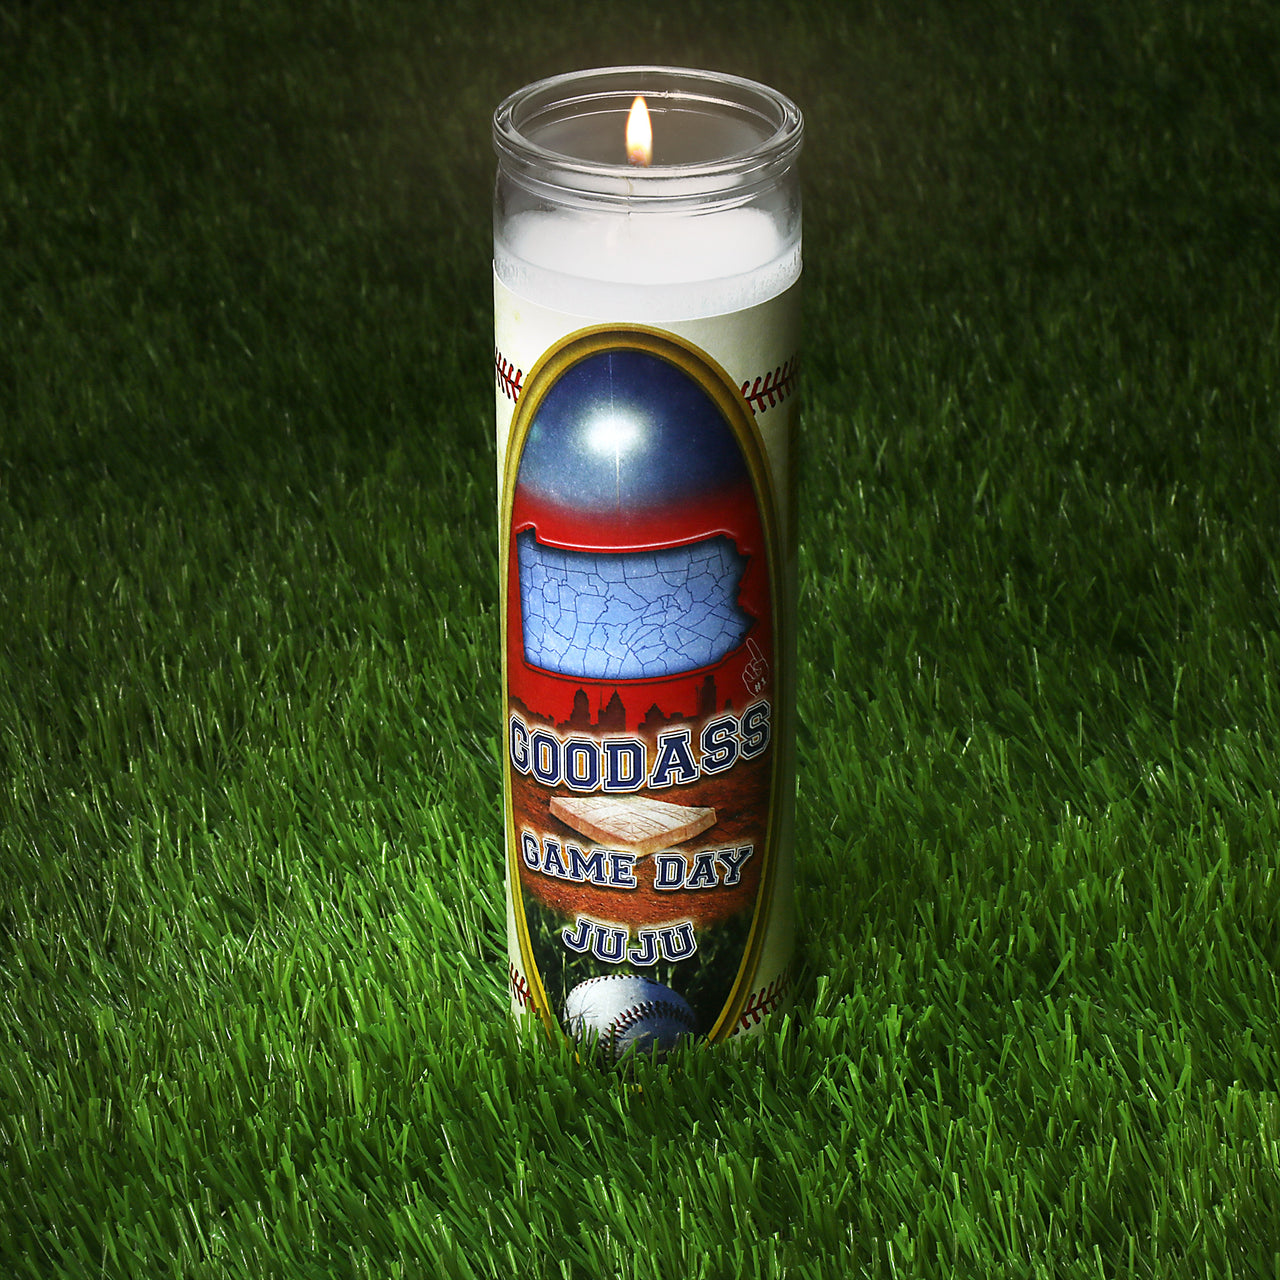 The Philadelphia Baseball Game Day Juju Unscented Prayer Candle lit up